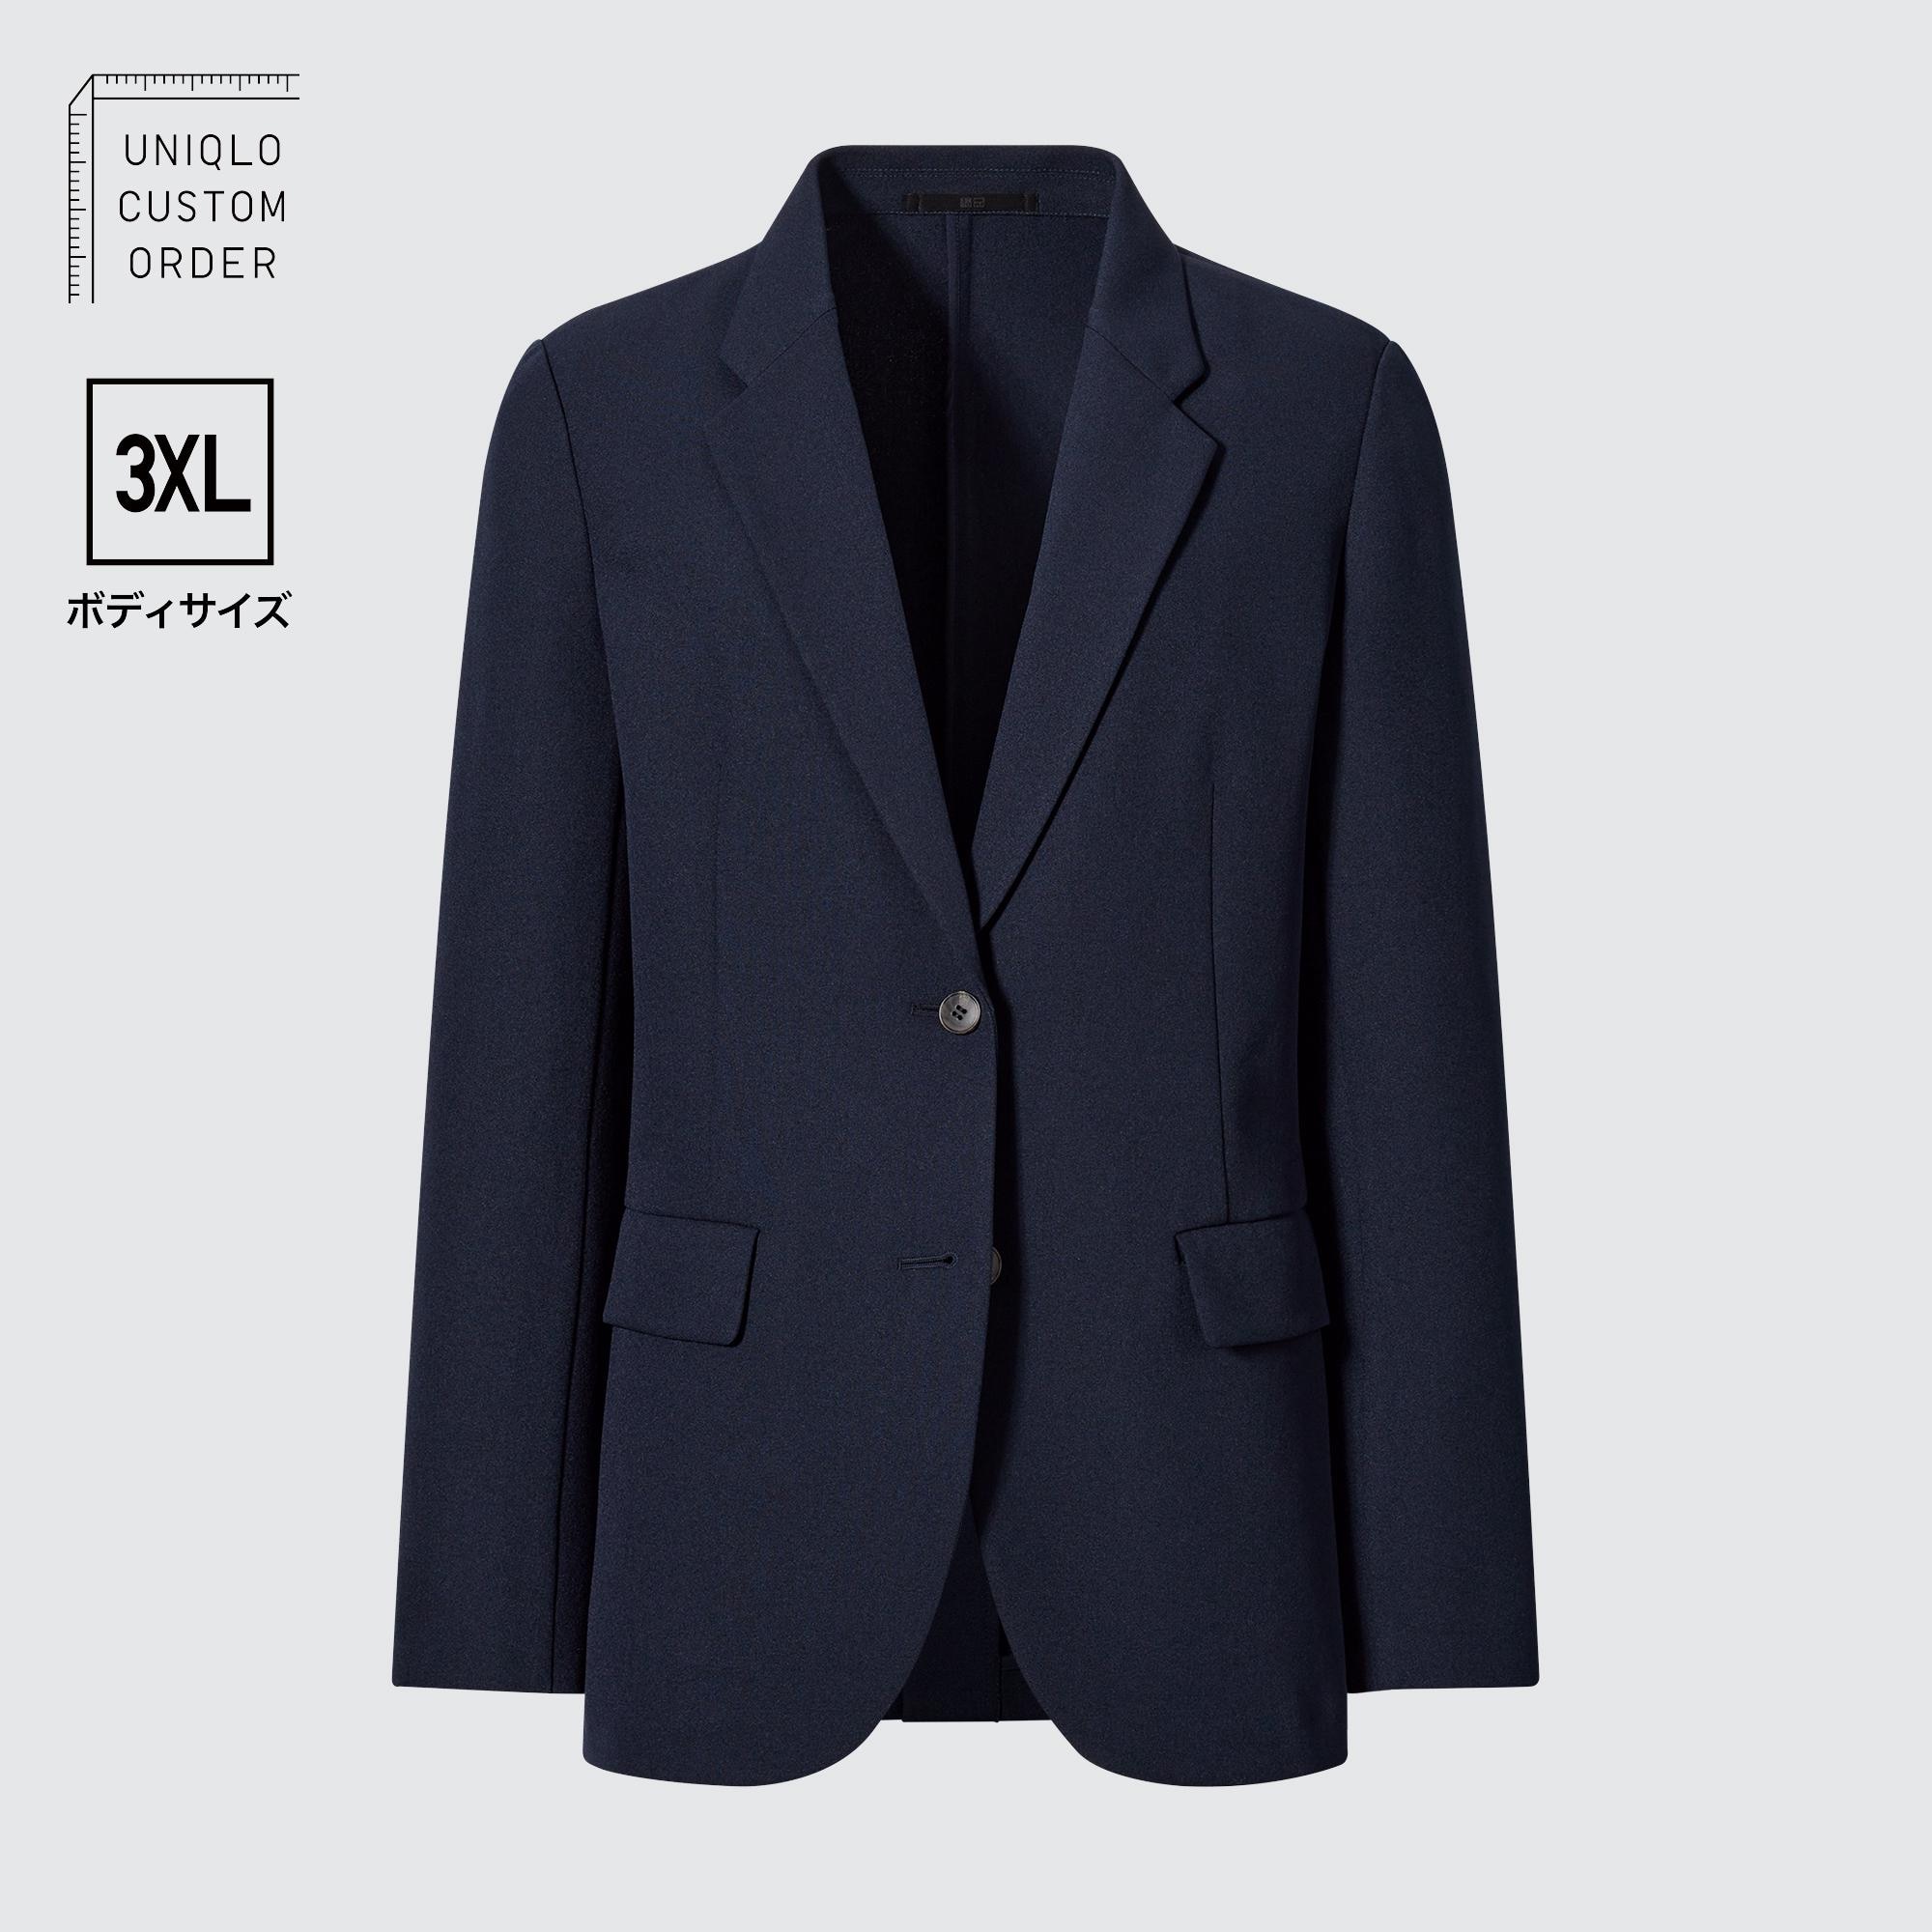 Куртка UNIQLO Кандо 3XL, темно-синий цена и фото